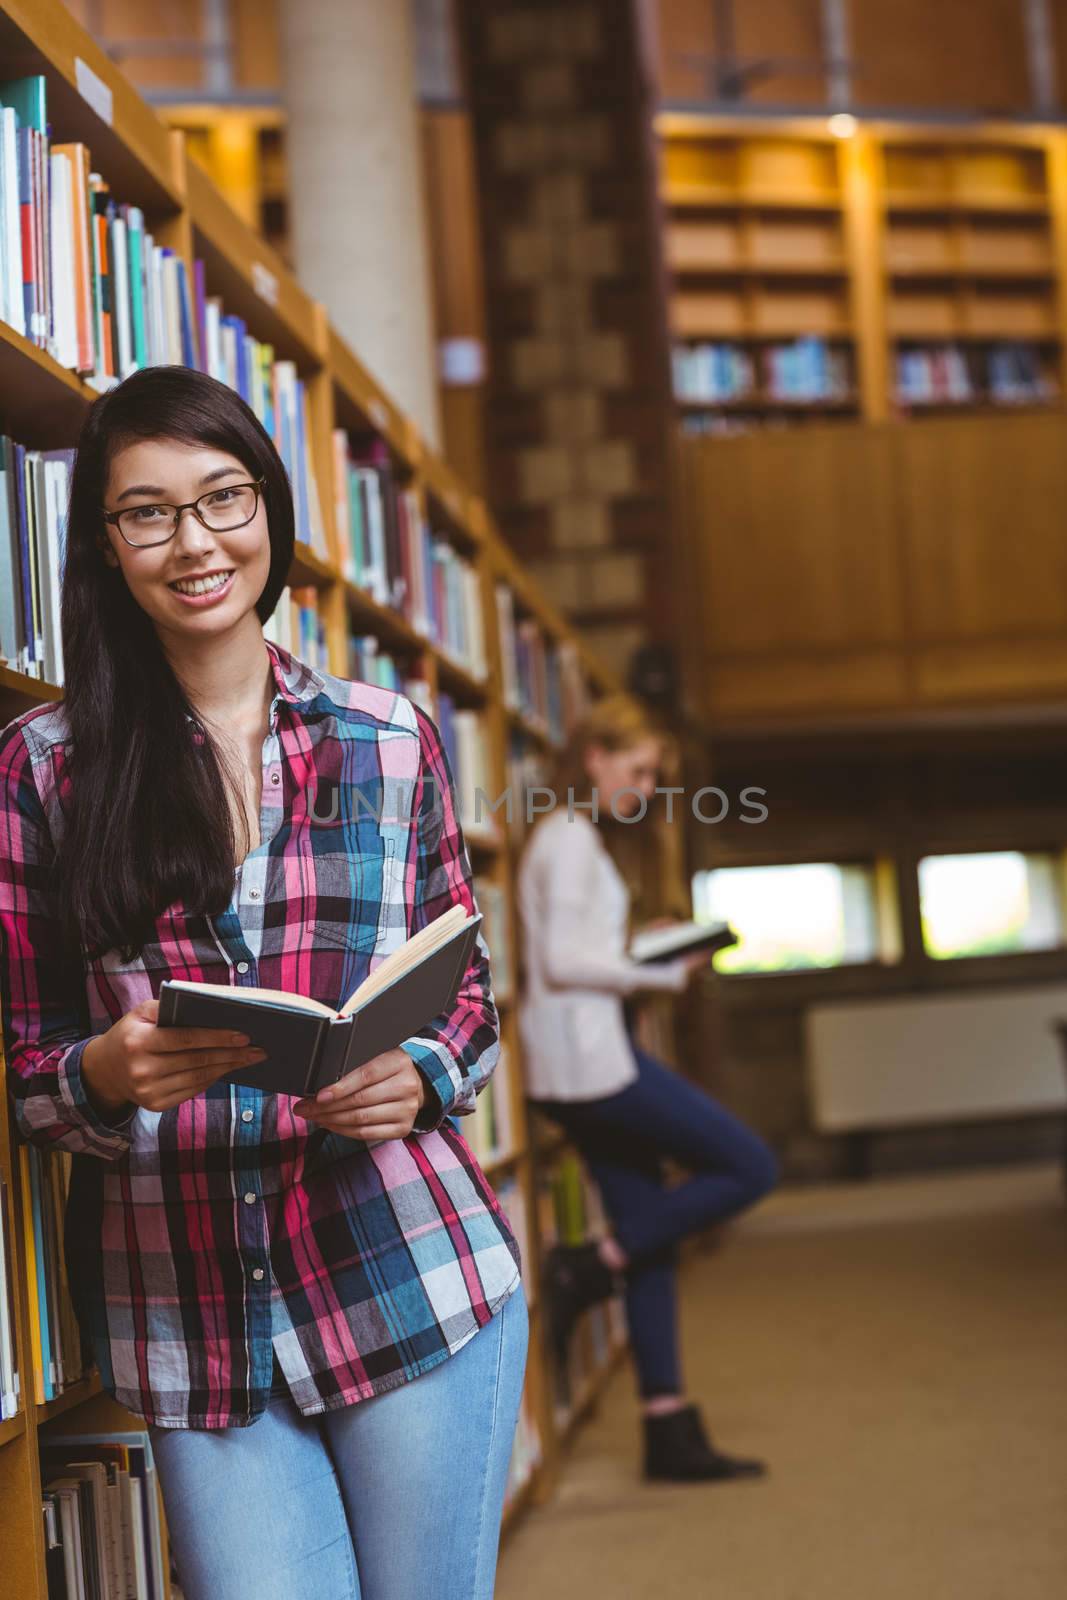 Smiling student leaning against bookshelves reading book by Wavebreakmedia